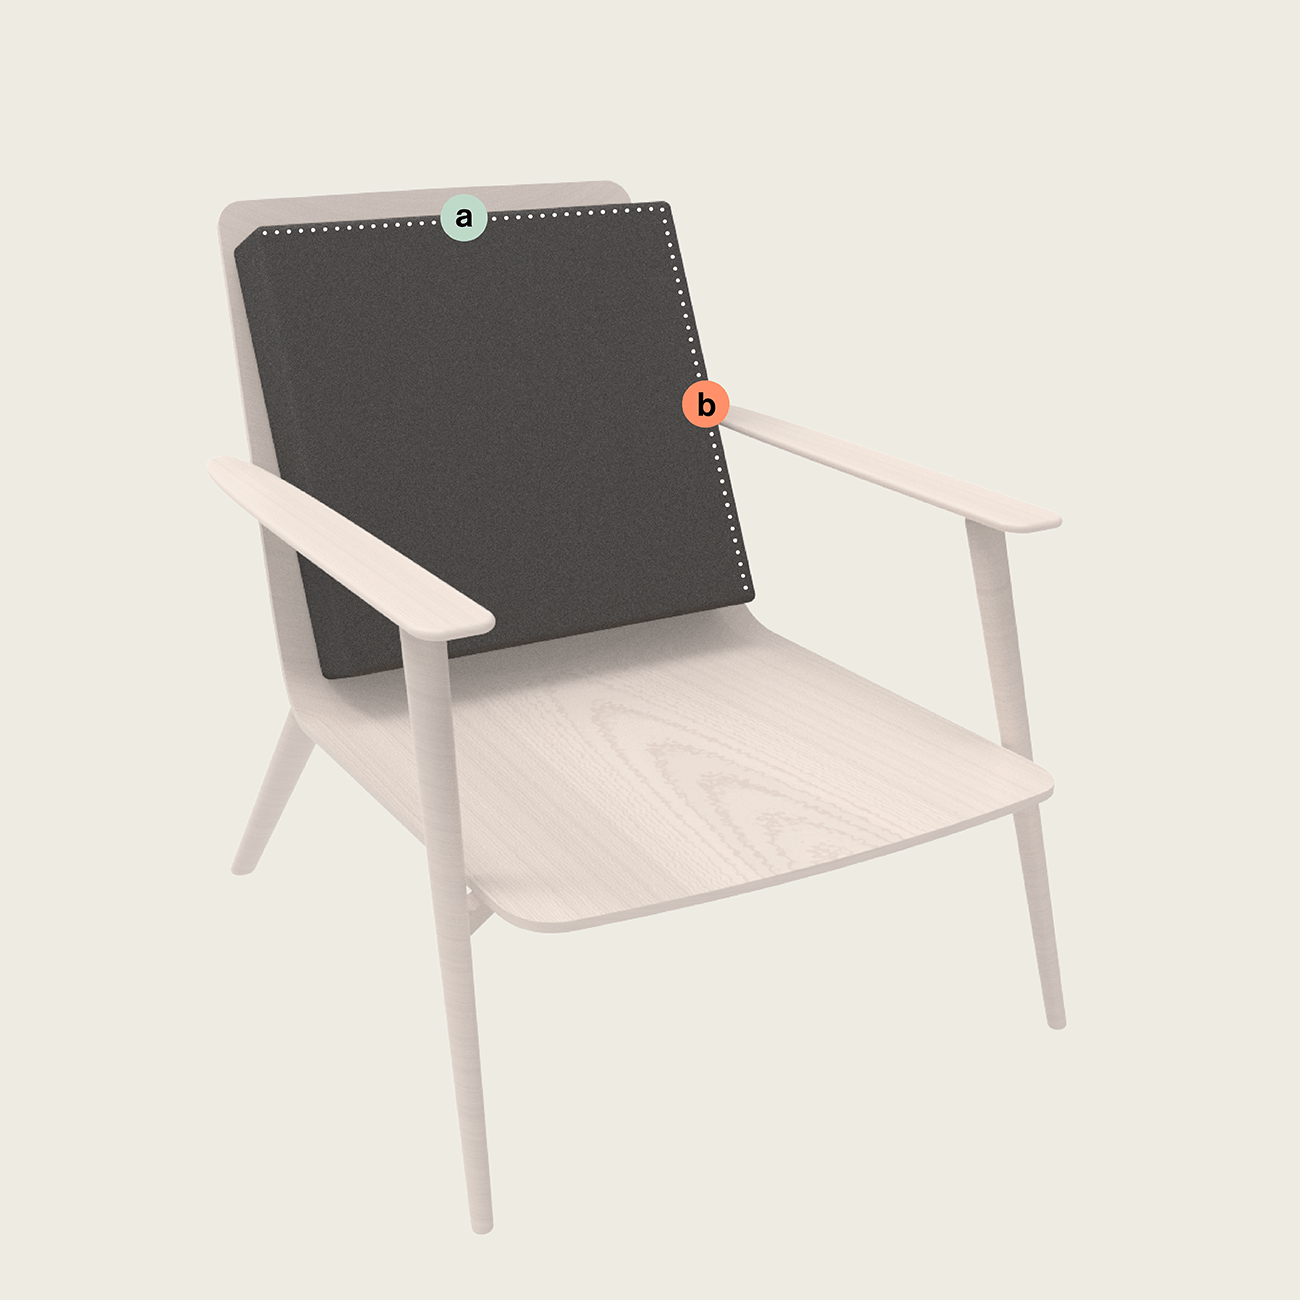 Rechteckiges Lounge Sessel Polster Rückenkissen von Snooze Project